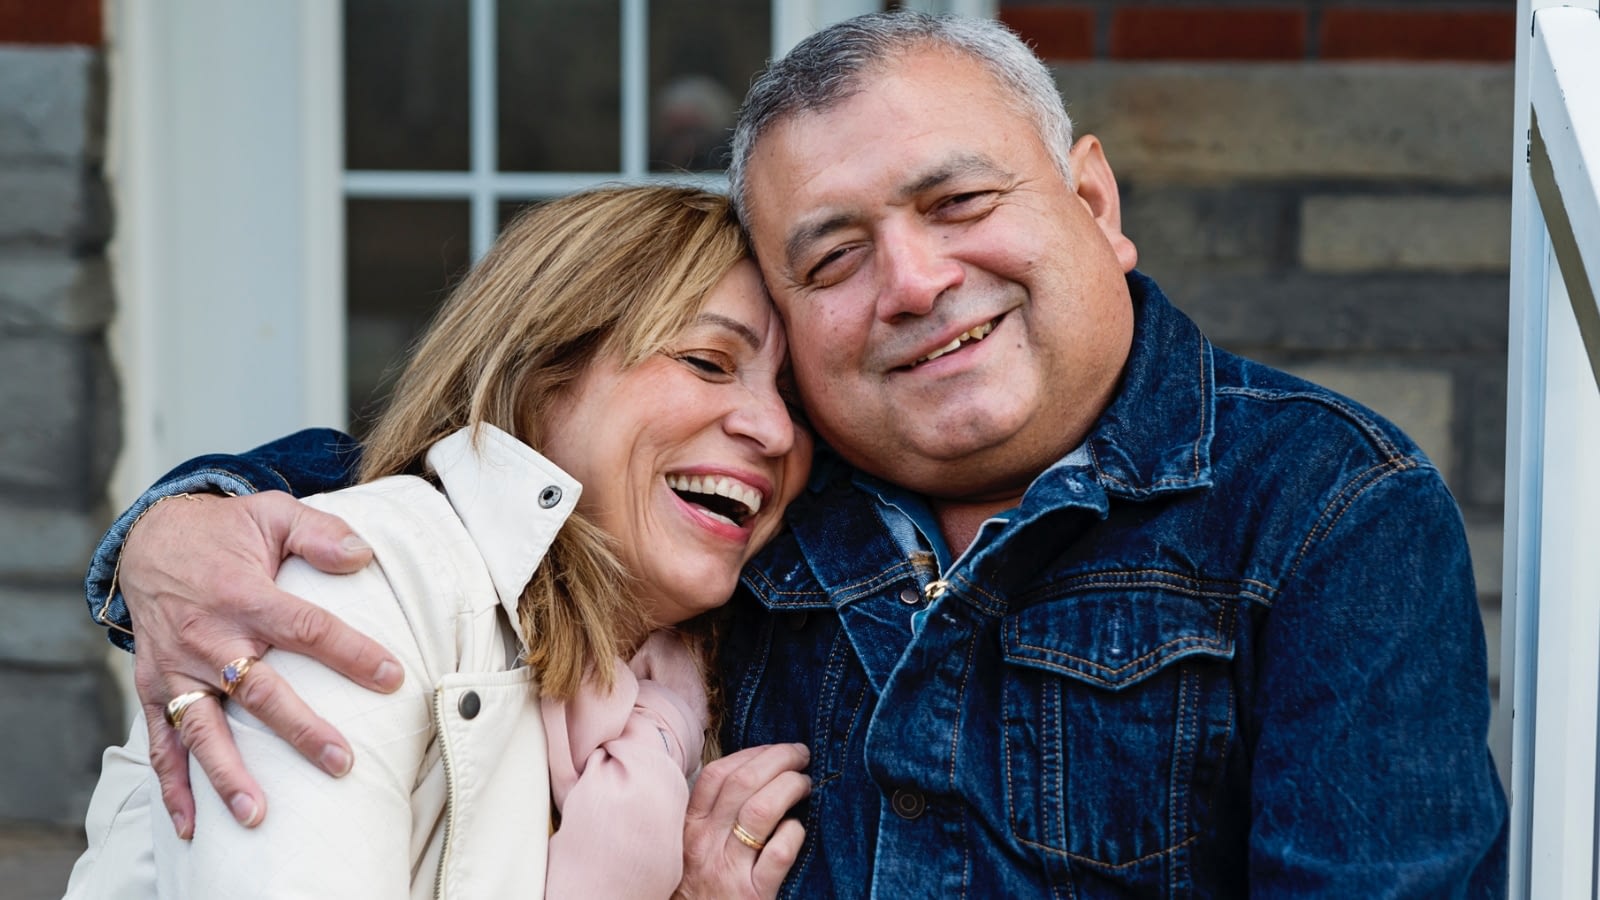 senior latino couple embracing and smiling